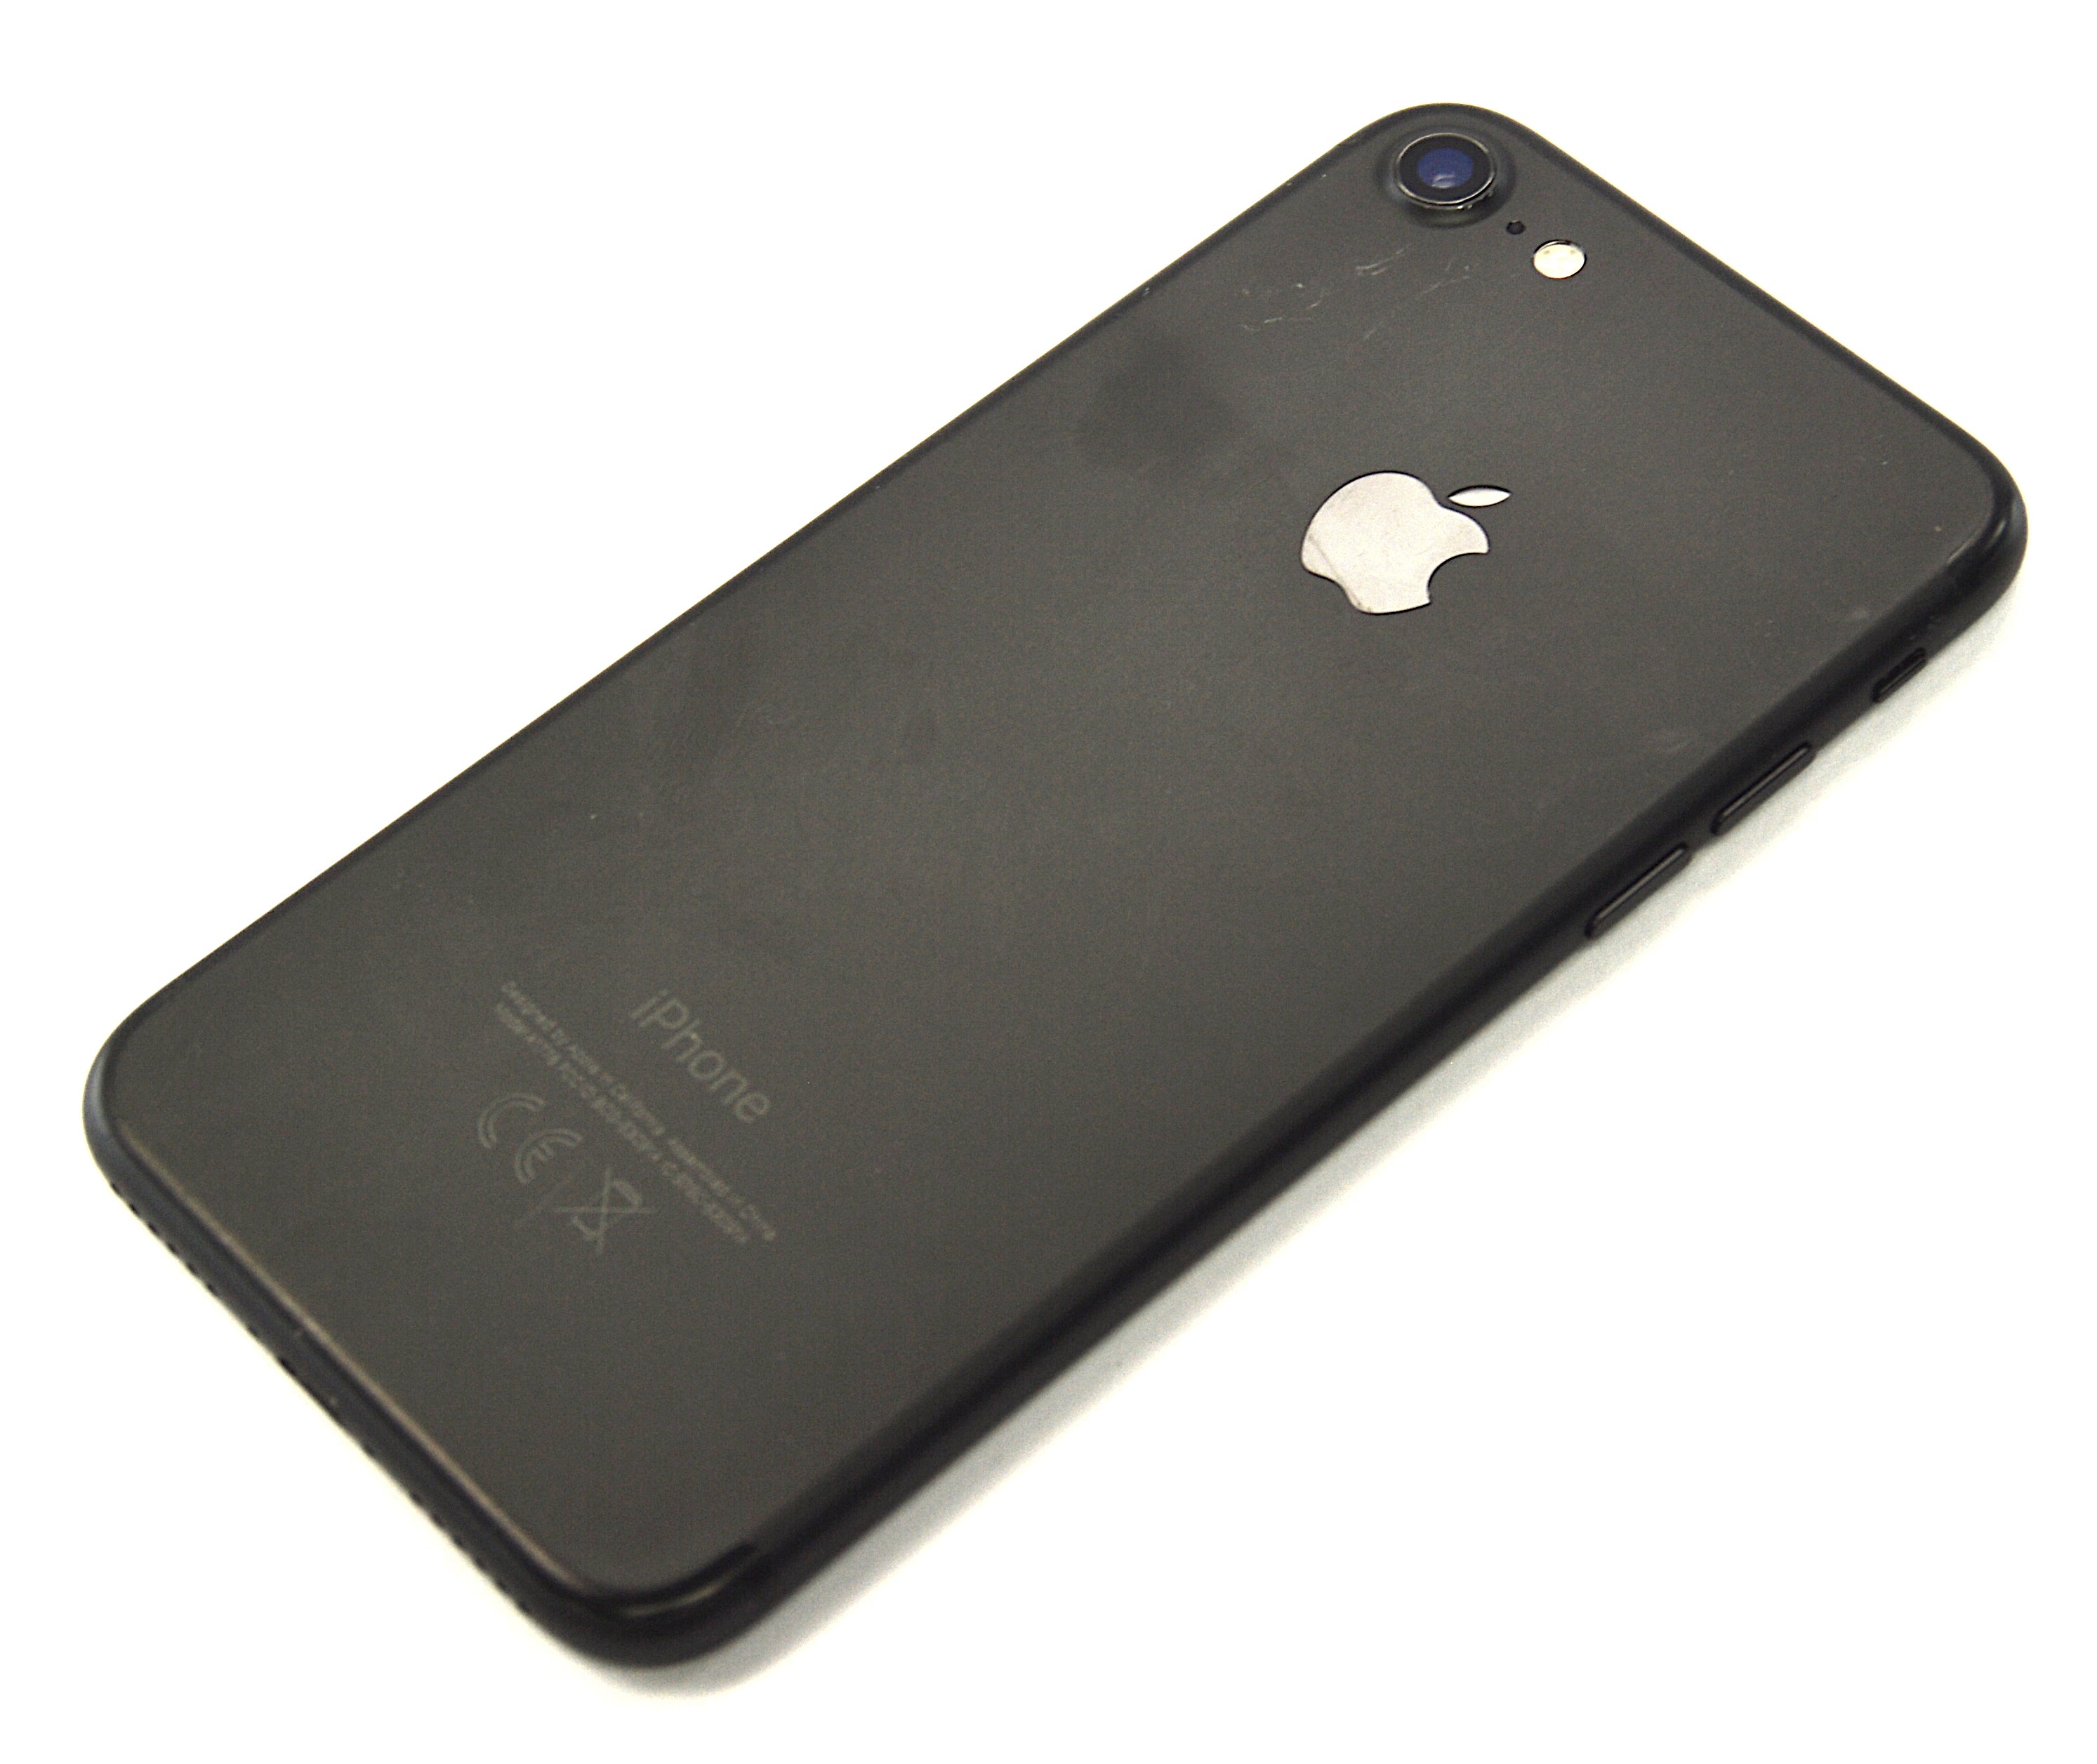 Apple iPhone 7 Smartphone, 32GB, Network Unlocked, Black, A1778